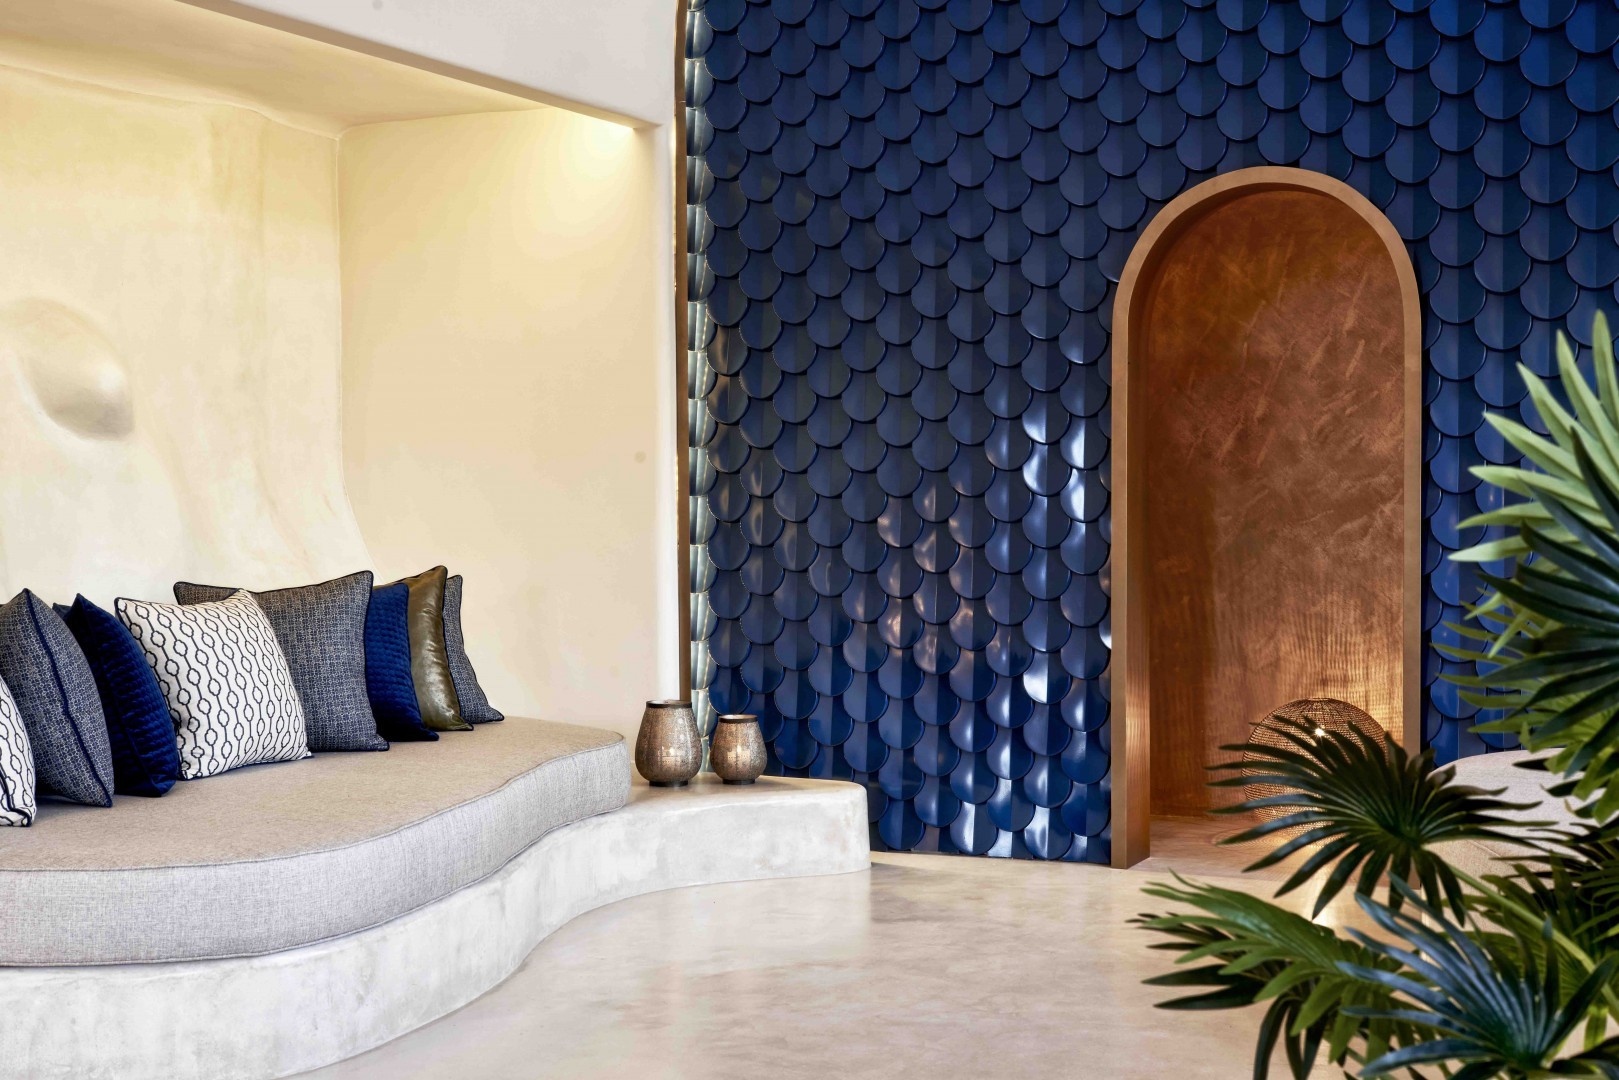 Skyfall Hotel, Santorini. KAZA: Shingle design by Patrycja Domanska and Tanja Lightfoot